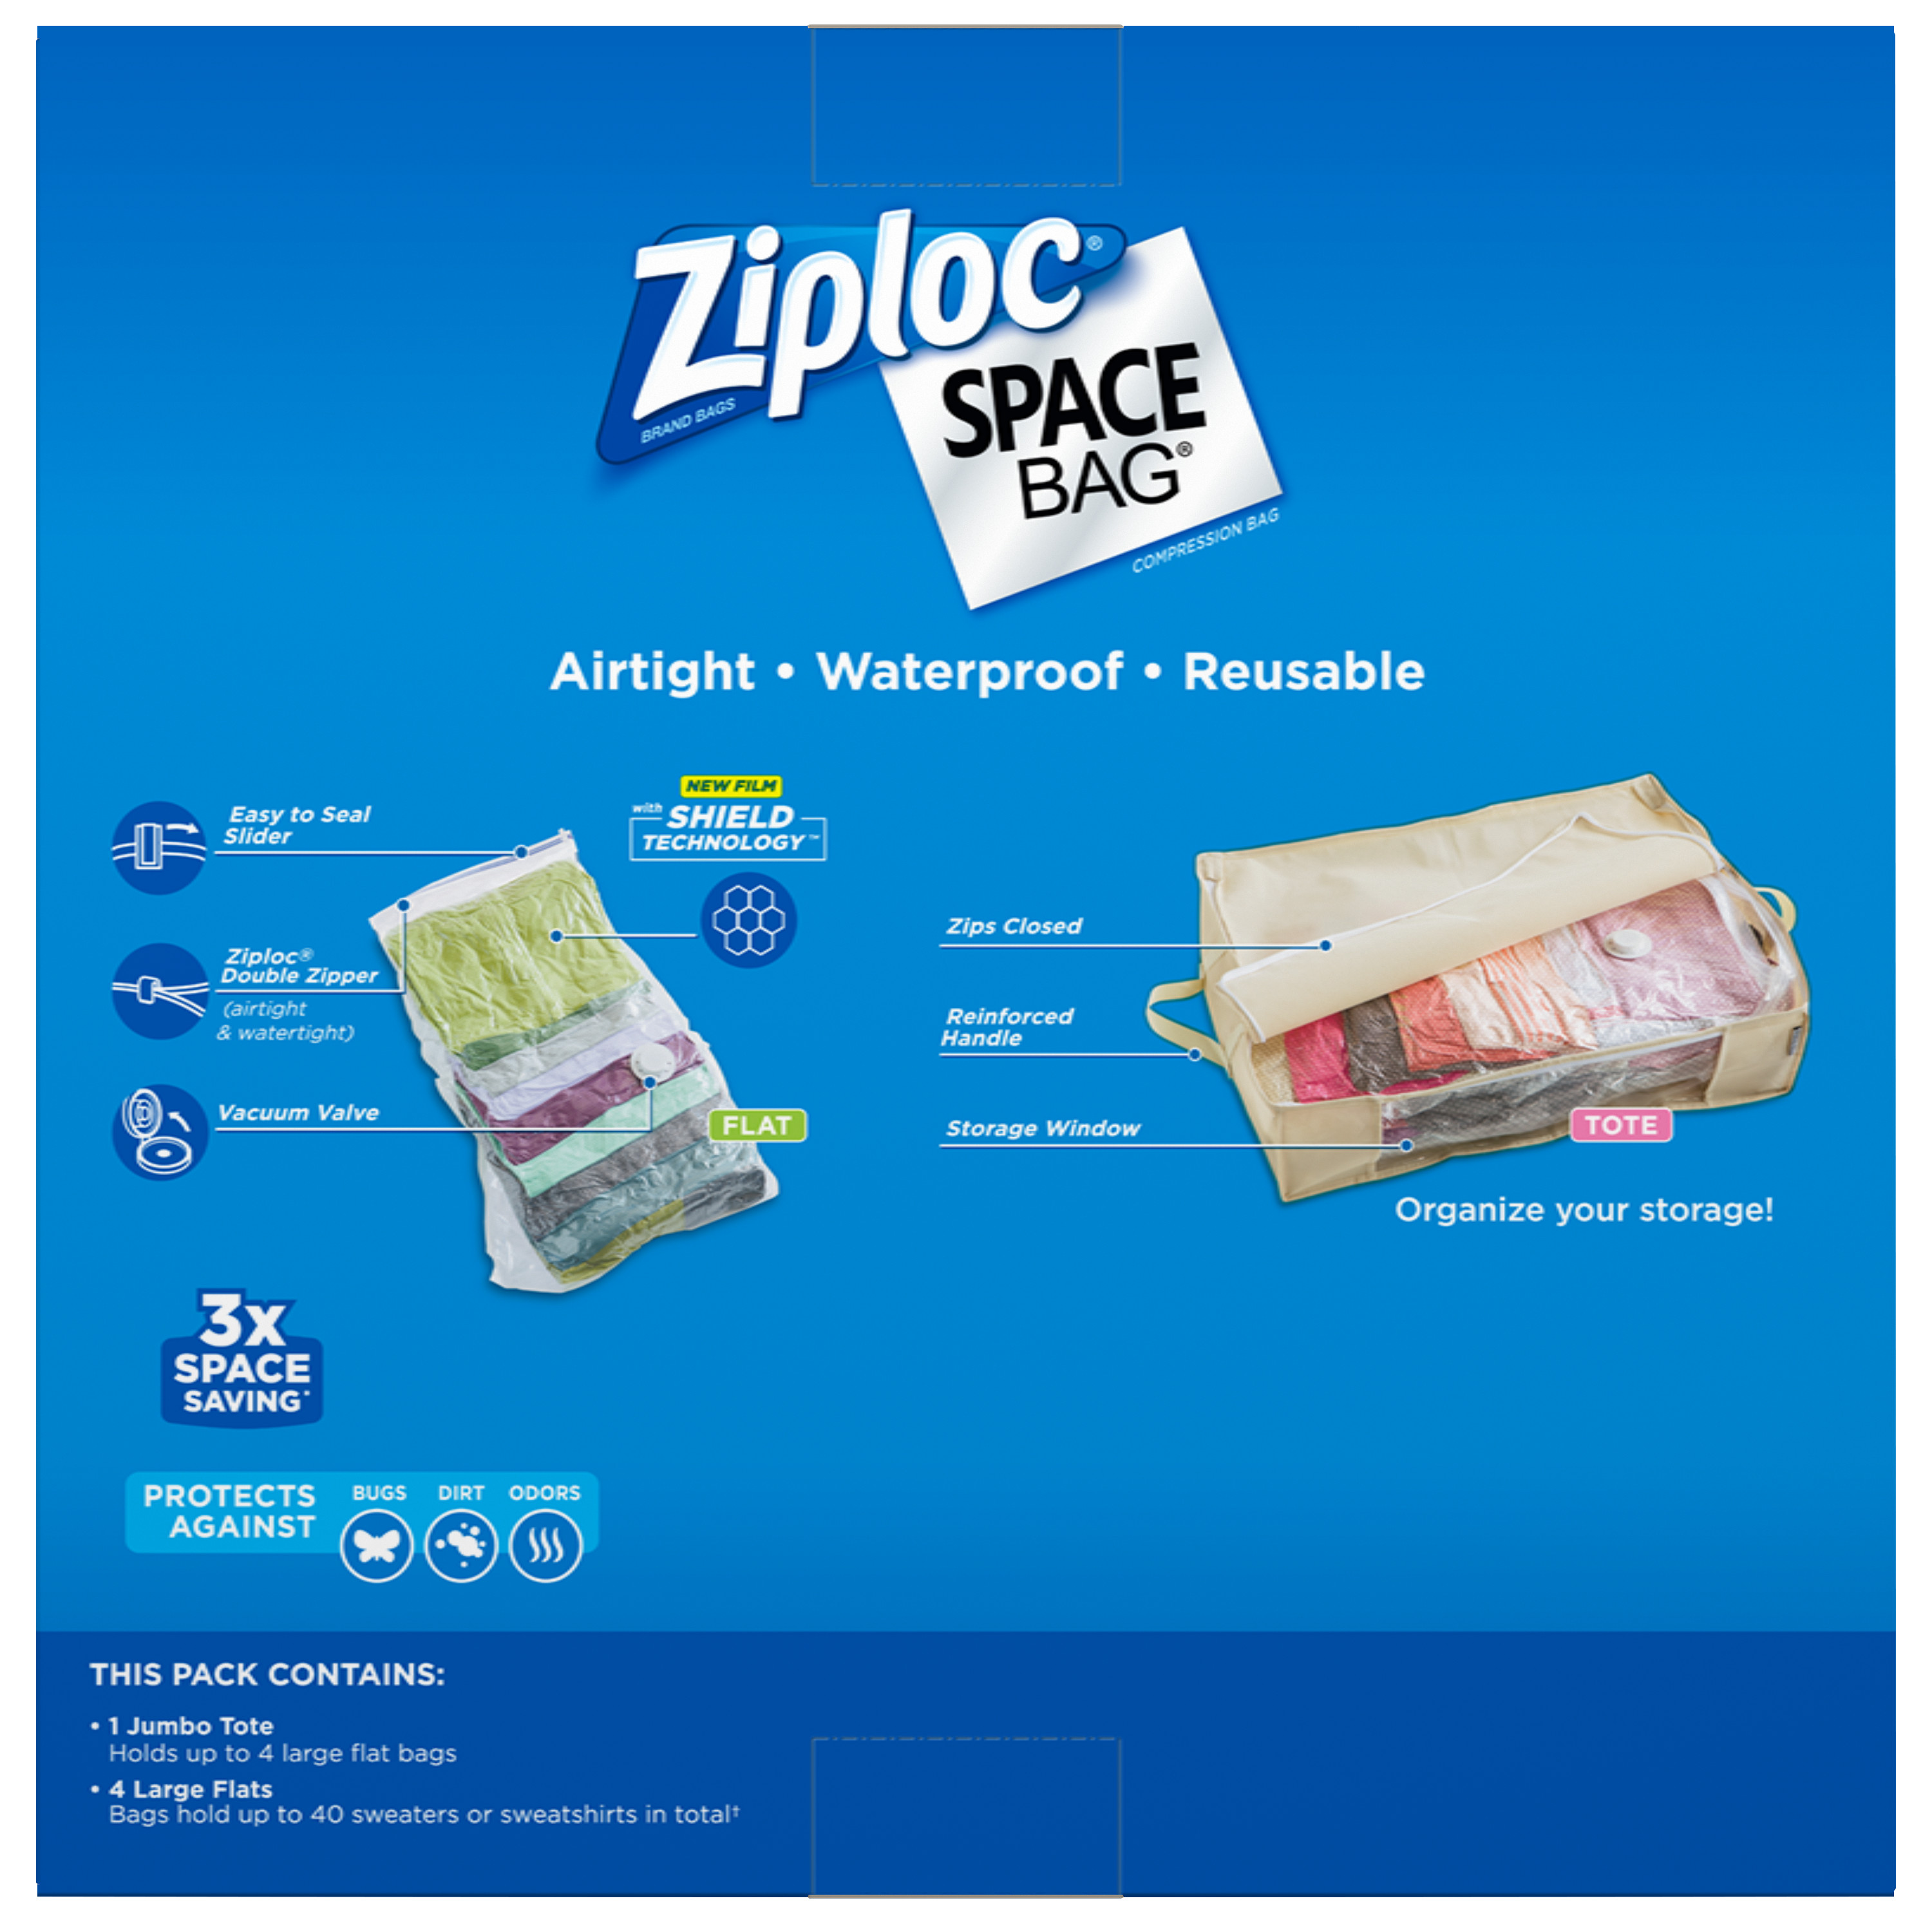 Ziploc Space Bag Organizer Set-Clear, 1 Jumbo Tote, 4 Large Flat Bags, 5 ct - image 5 of 8